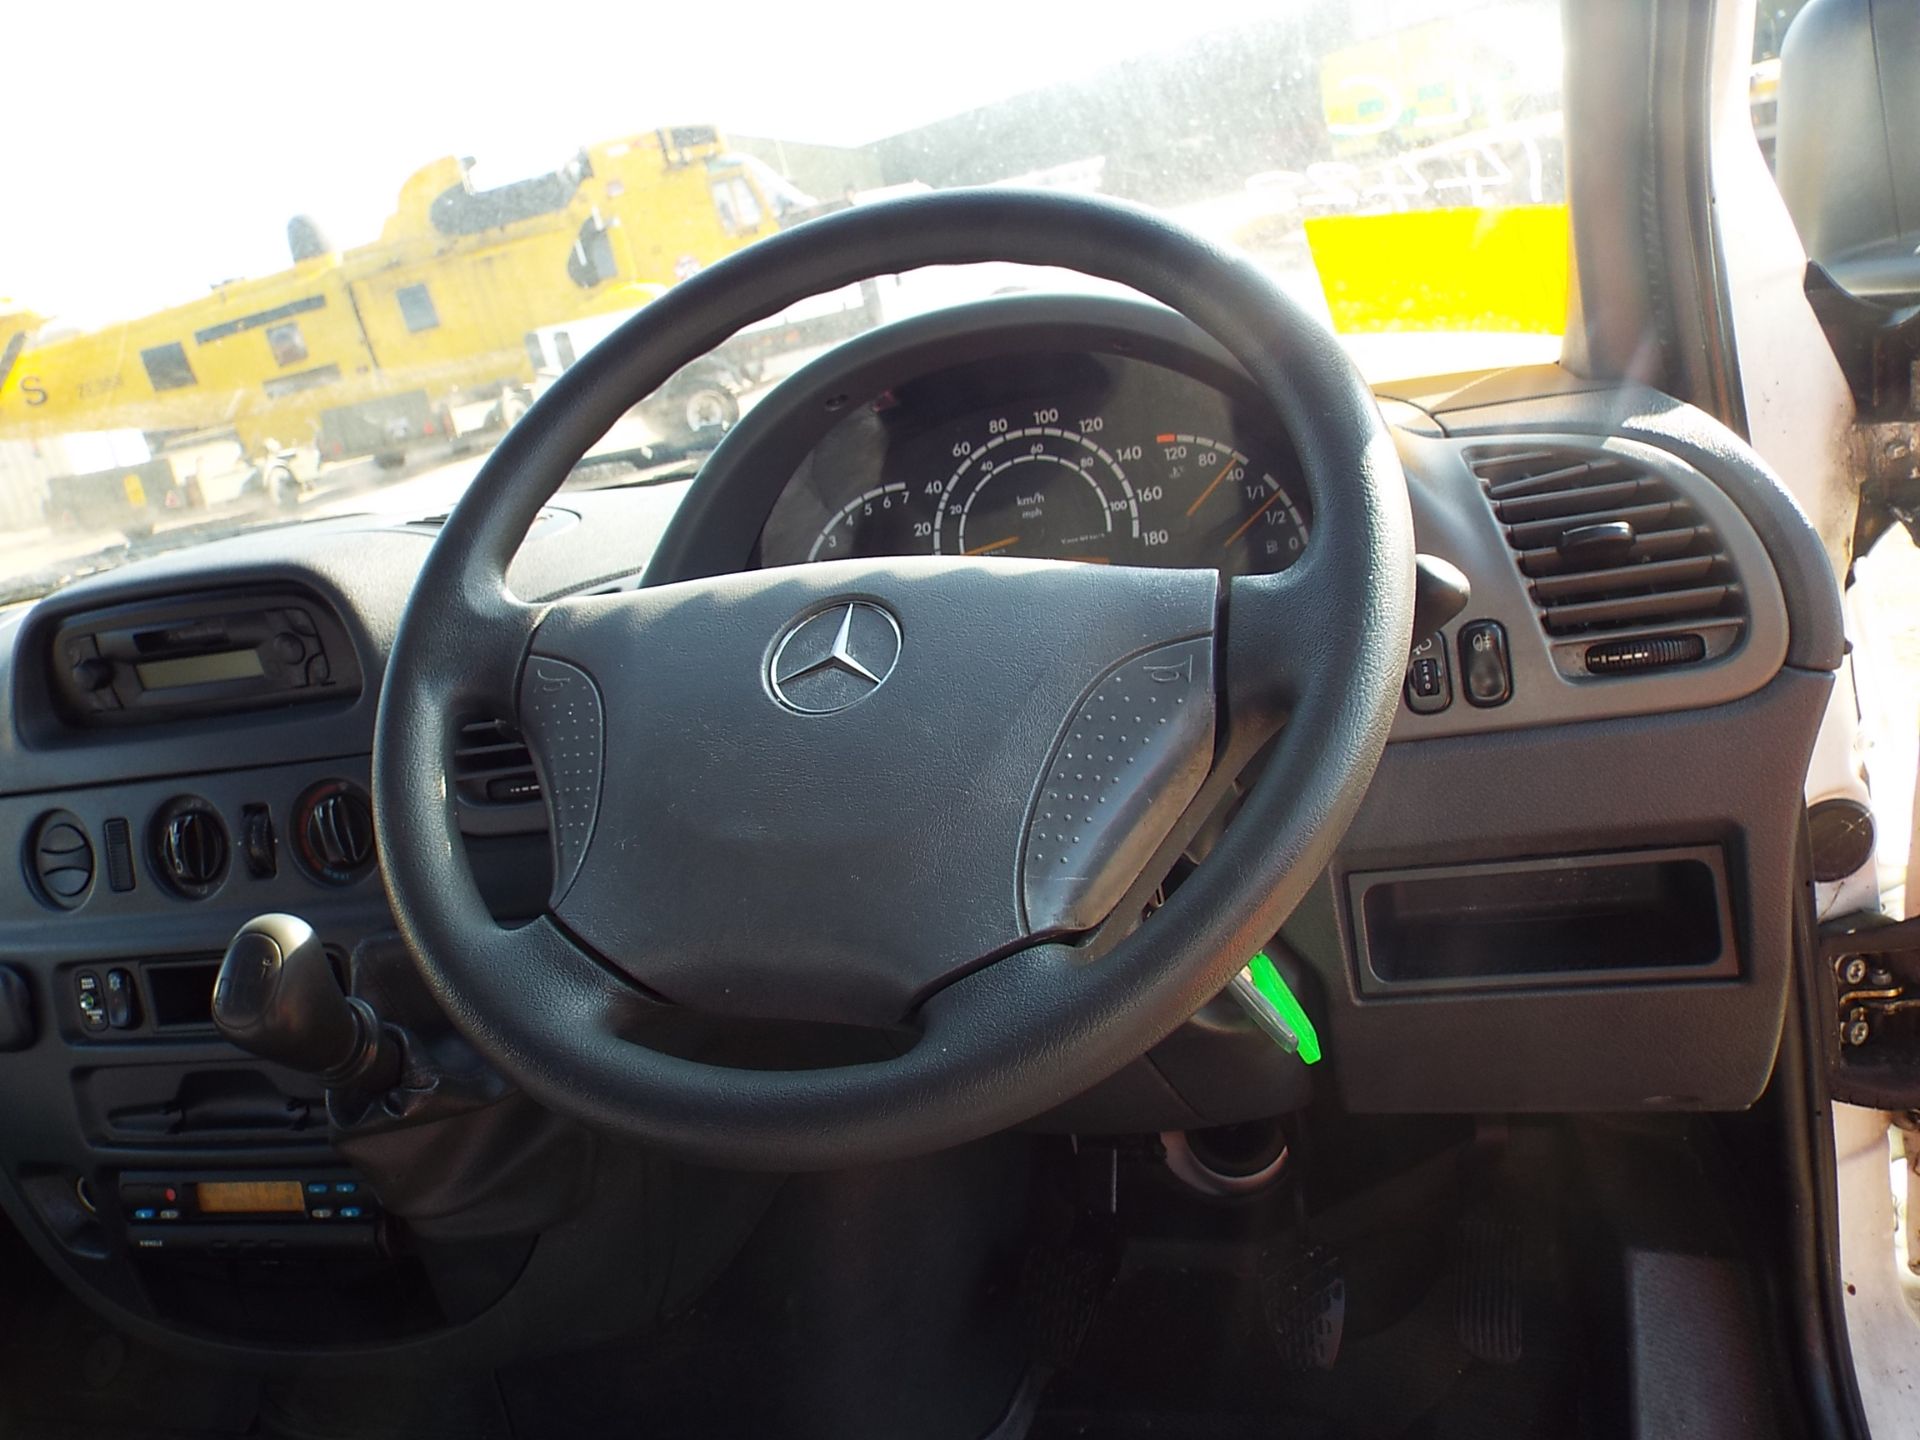 Mercedes Sprinter 416CDi Mobile Command Center - Image 12 of 48